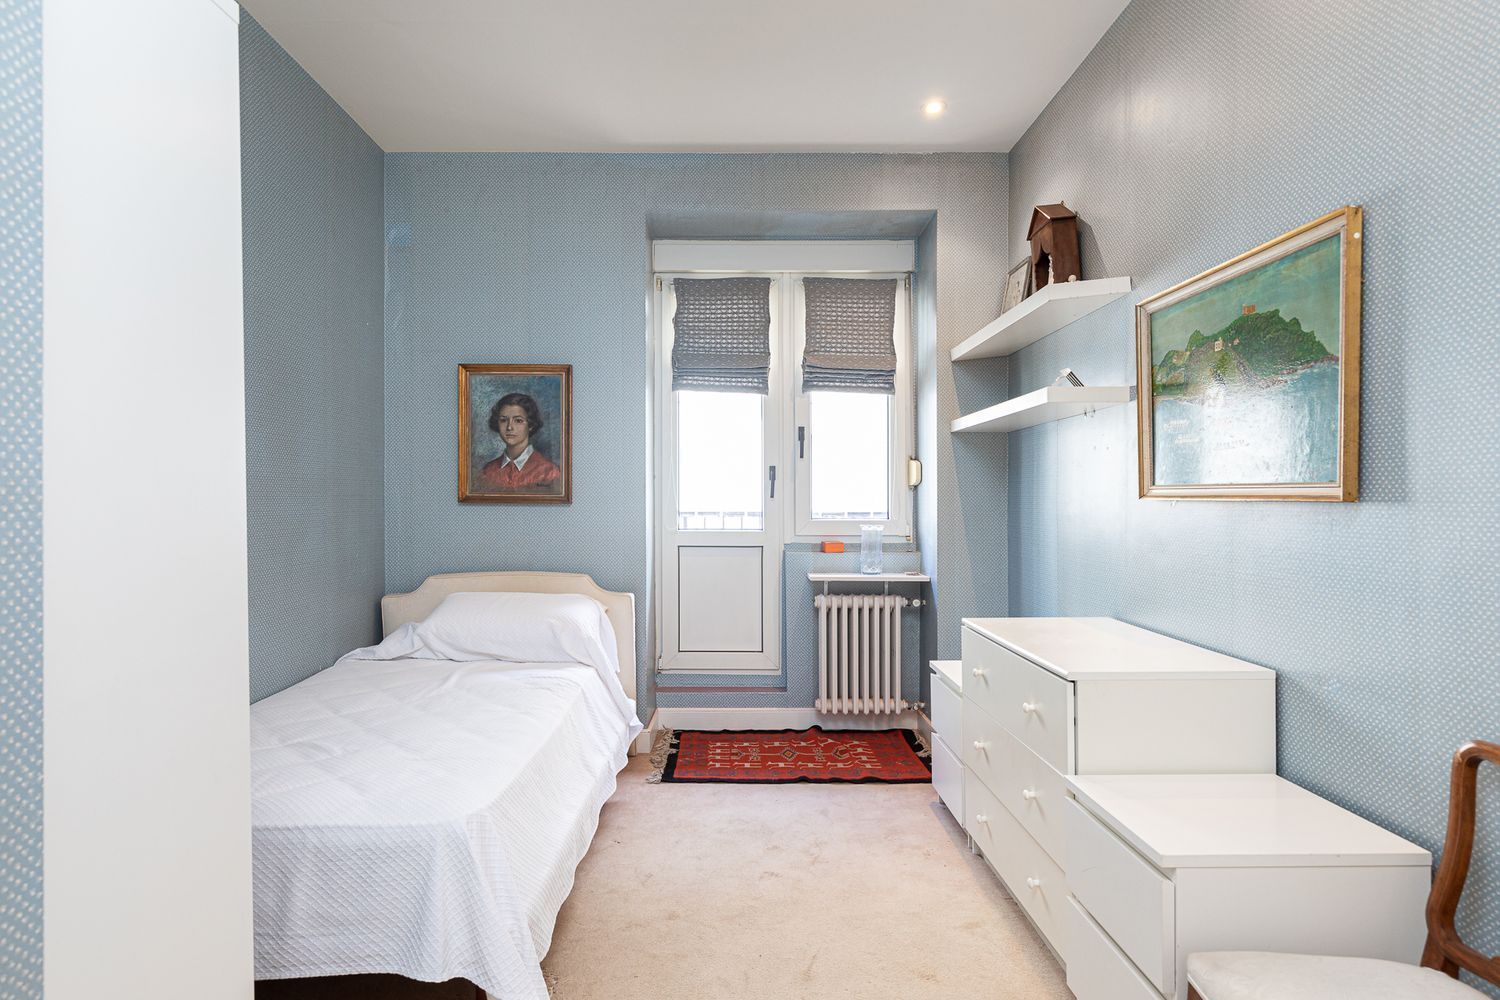 Apartment for sale on the seafront on Hernani street, in Donostia-San Sebastian